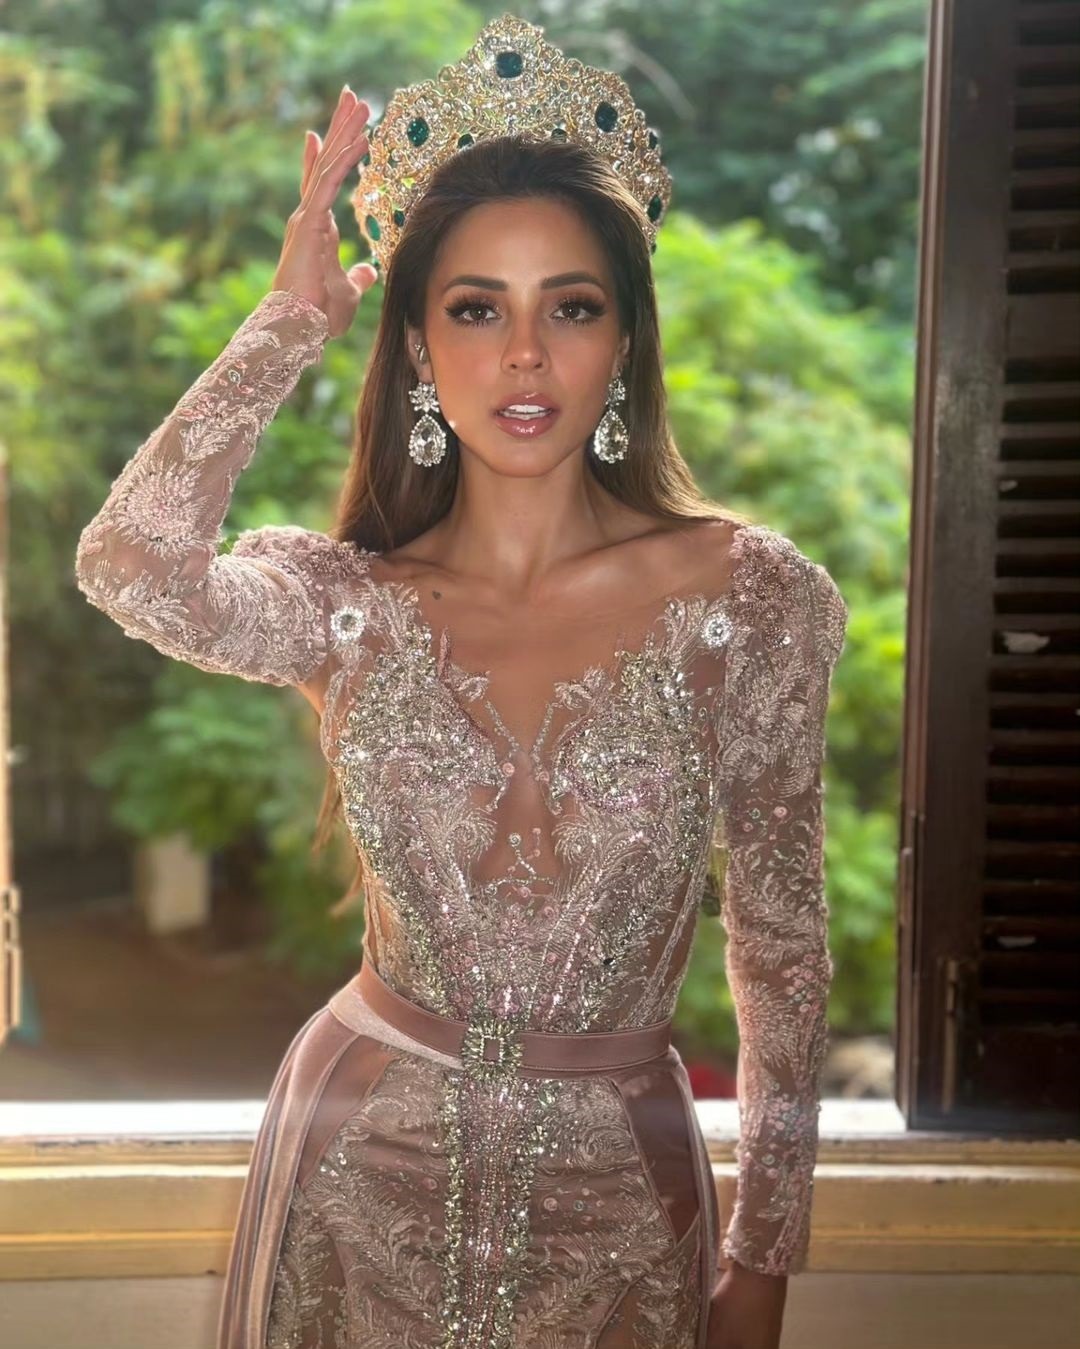 Luciana Fuster cumplió un año como Miss Grand Perú. Fuente: Instagram